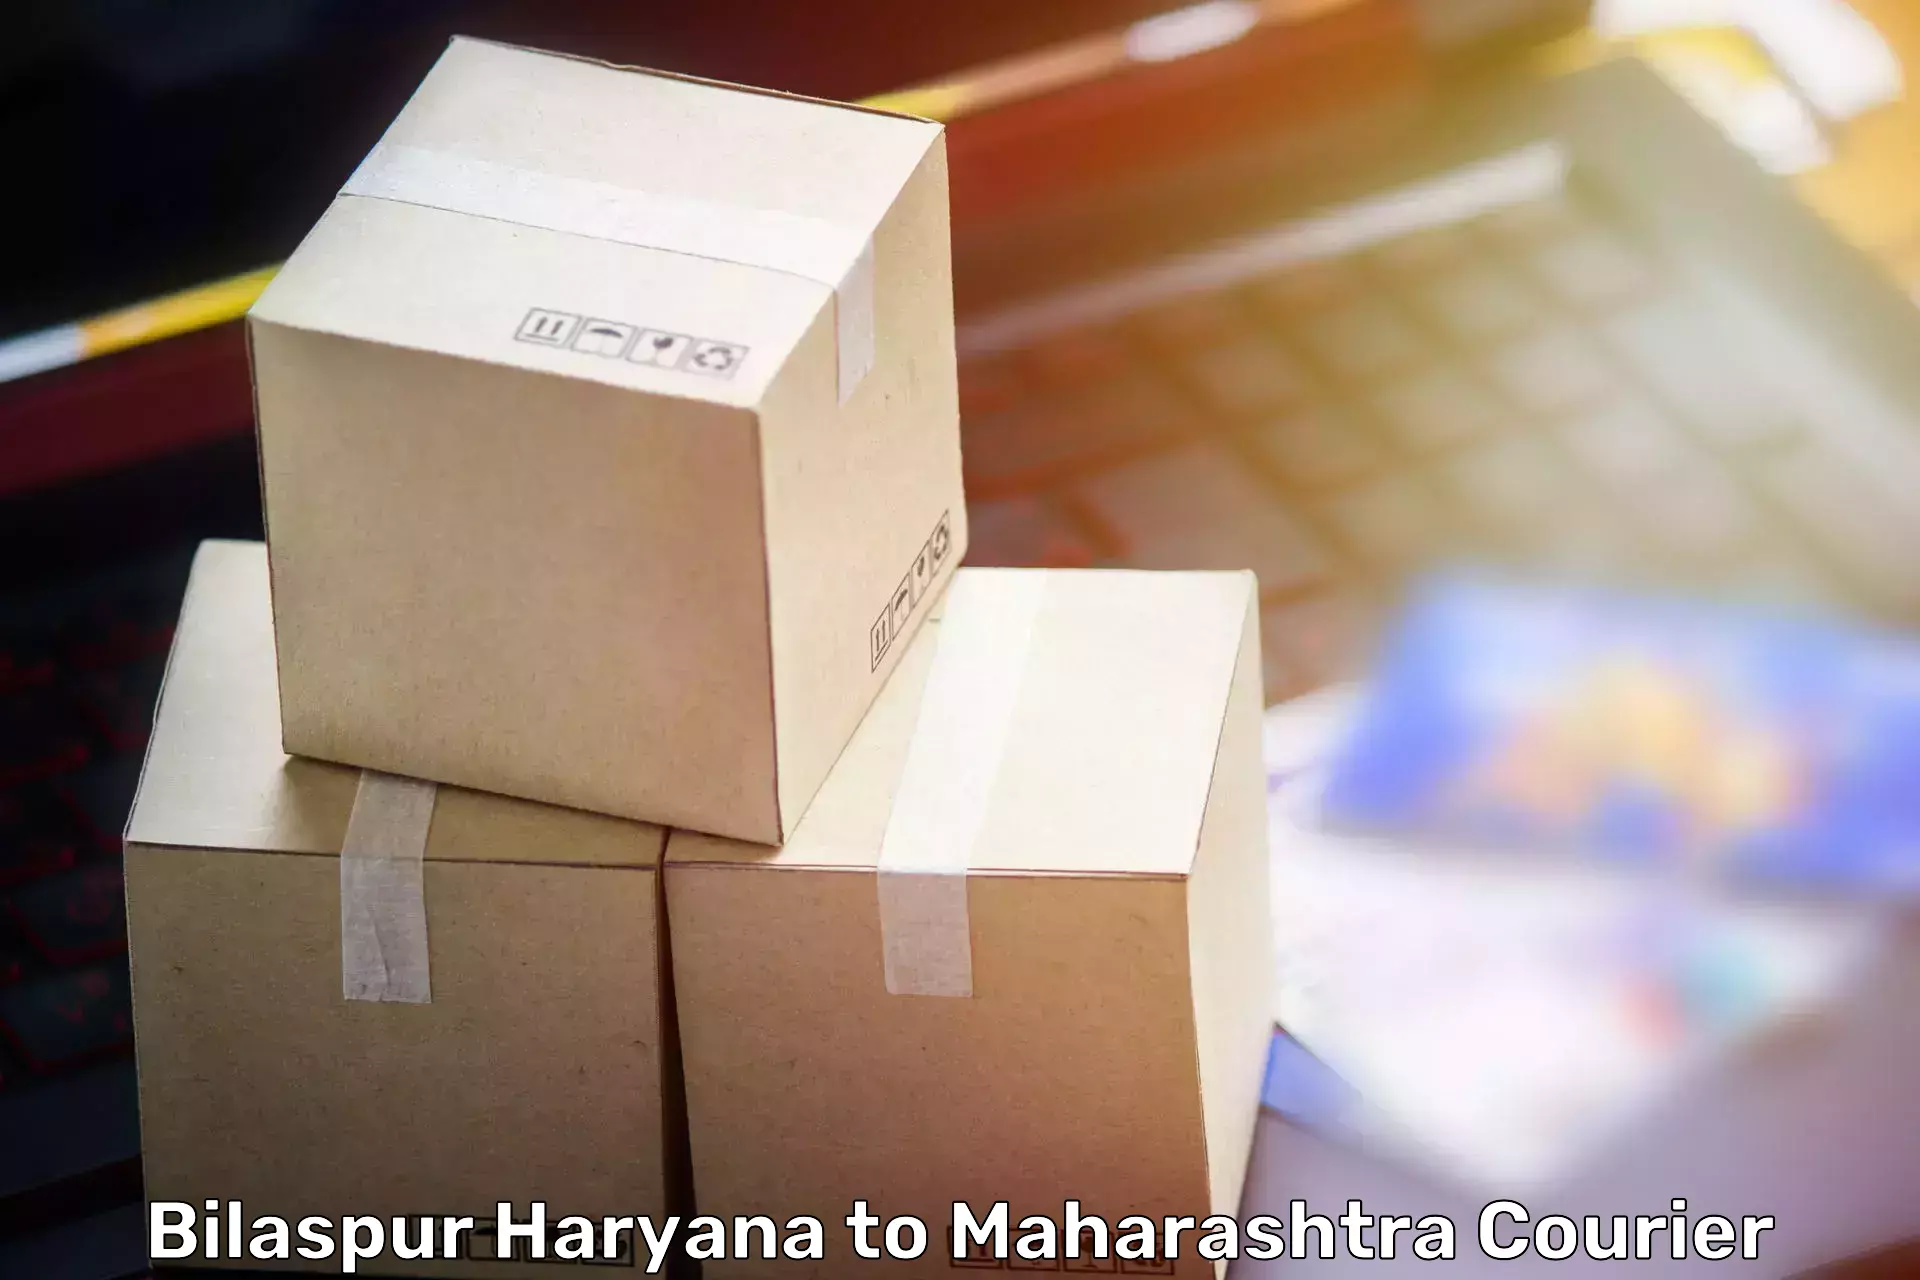 Professional moving assistance Bilaspur Haryana to Ulhasnagar